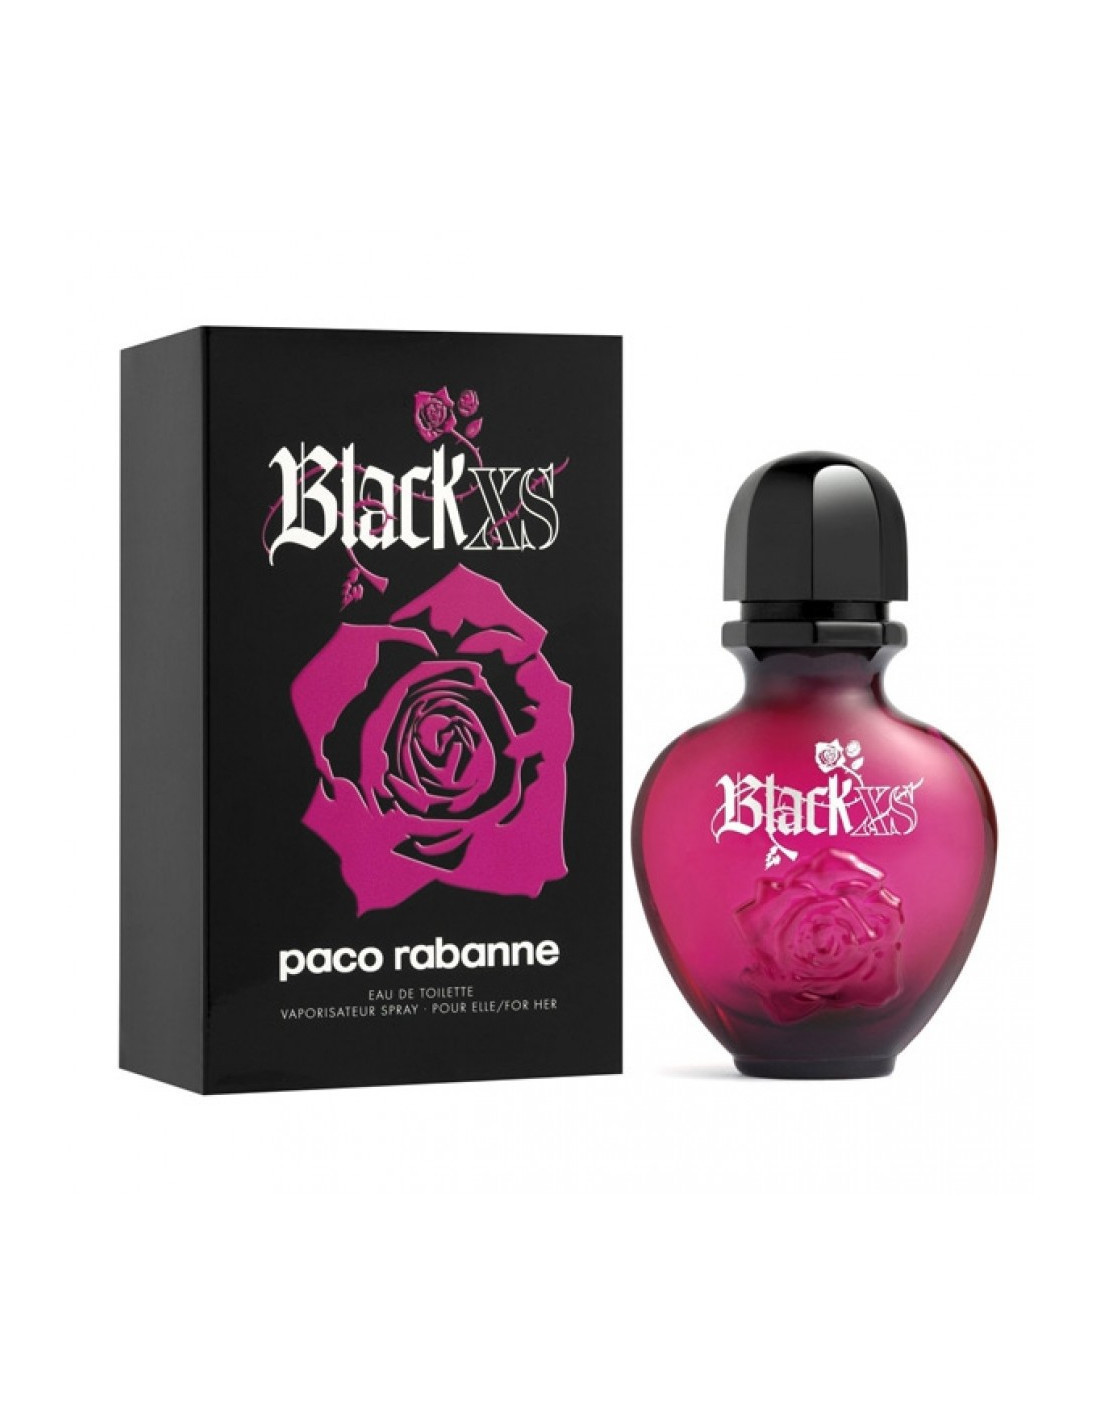 Paco rabanne xs женские. Paco Rabanne Black XS for her Eau de Parfum. Расо Rabanne Black XS. Paco Rabanne XS Black EDT (M) 50ml. Paco Rabanne Black XS for her.